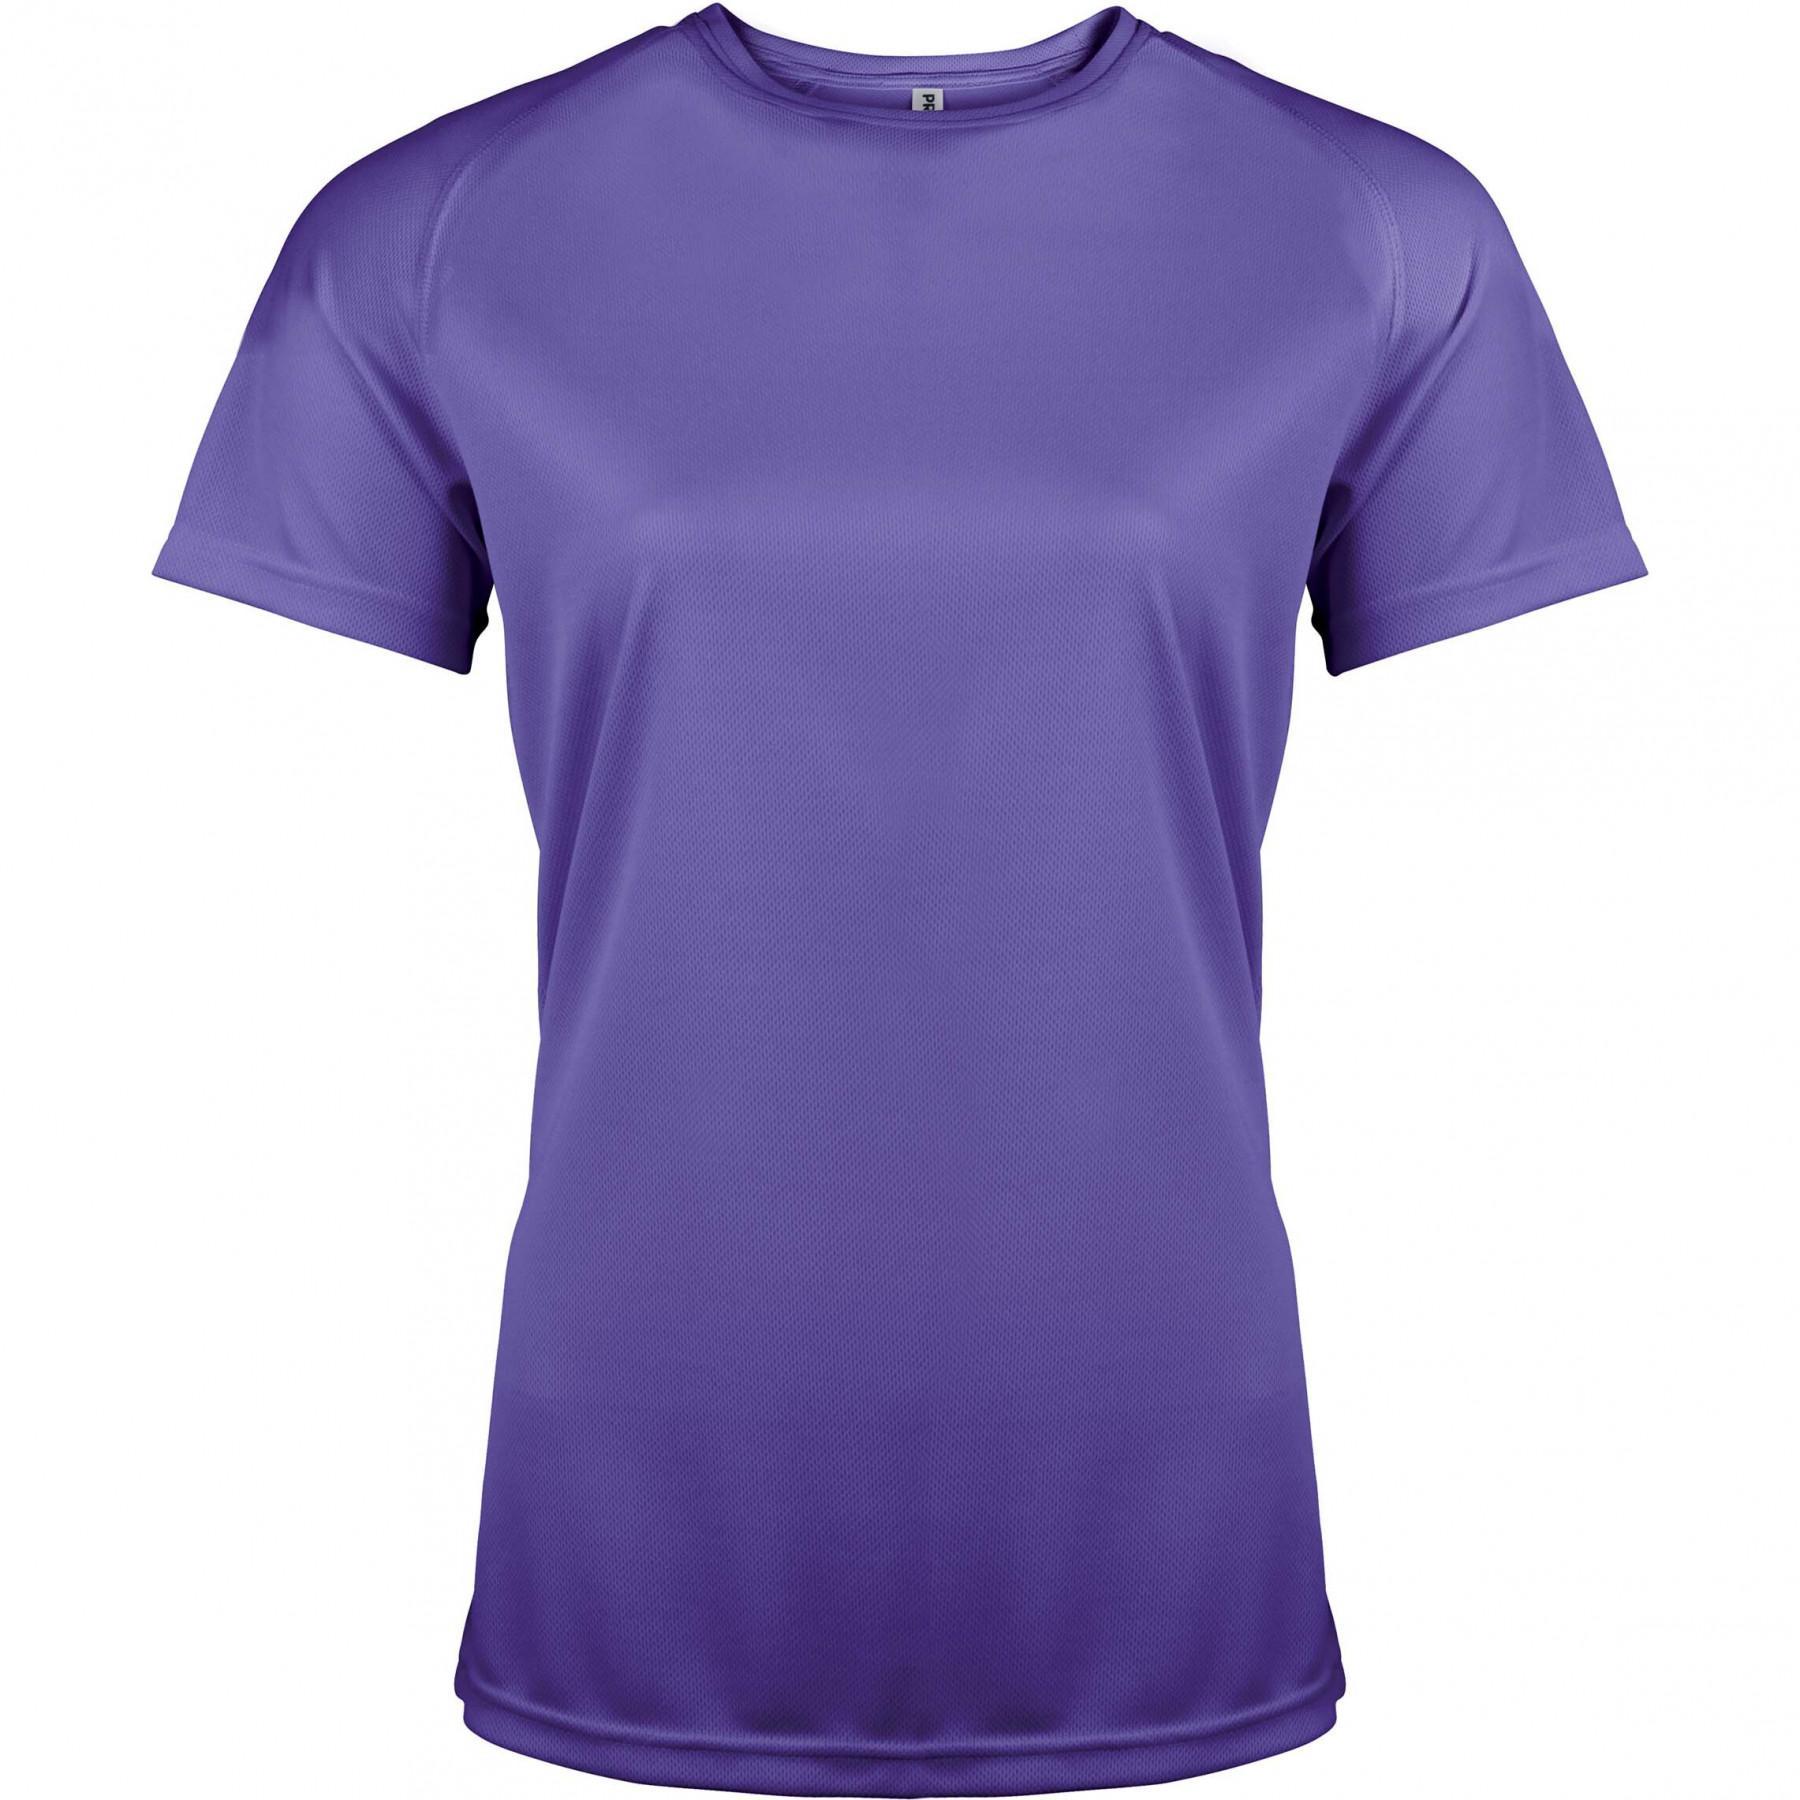 T-Shirt donna maniche corte Proact Sport